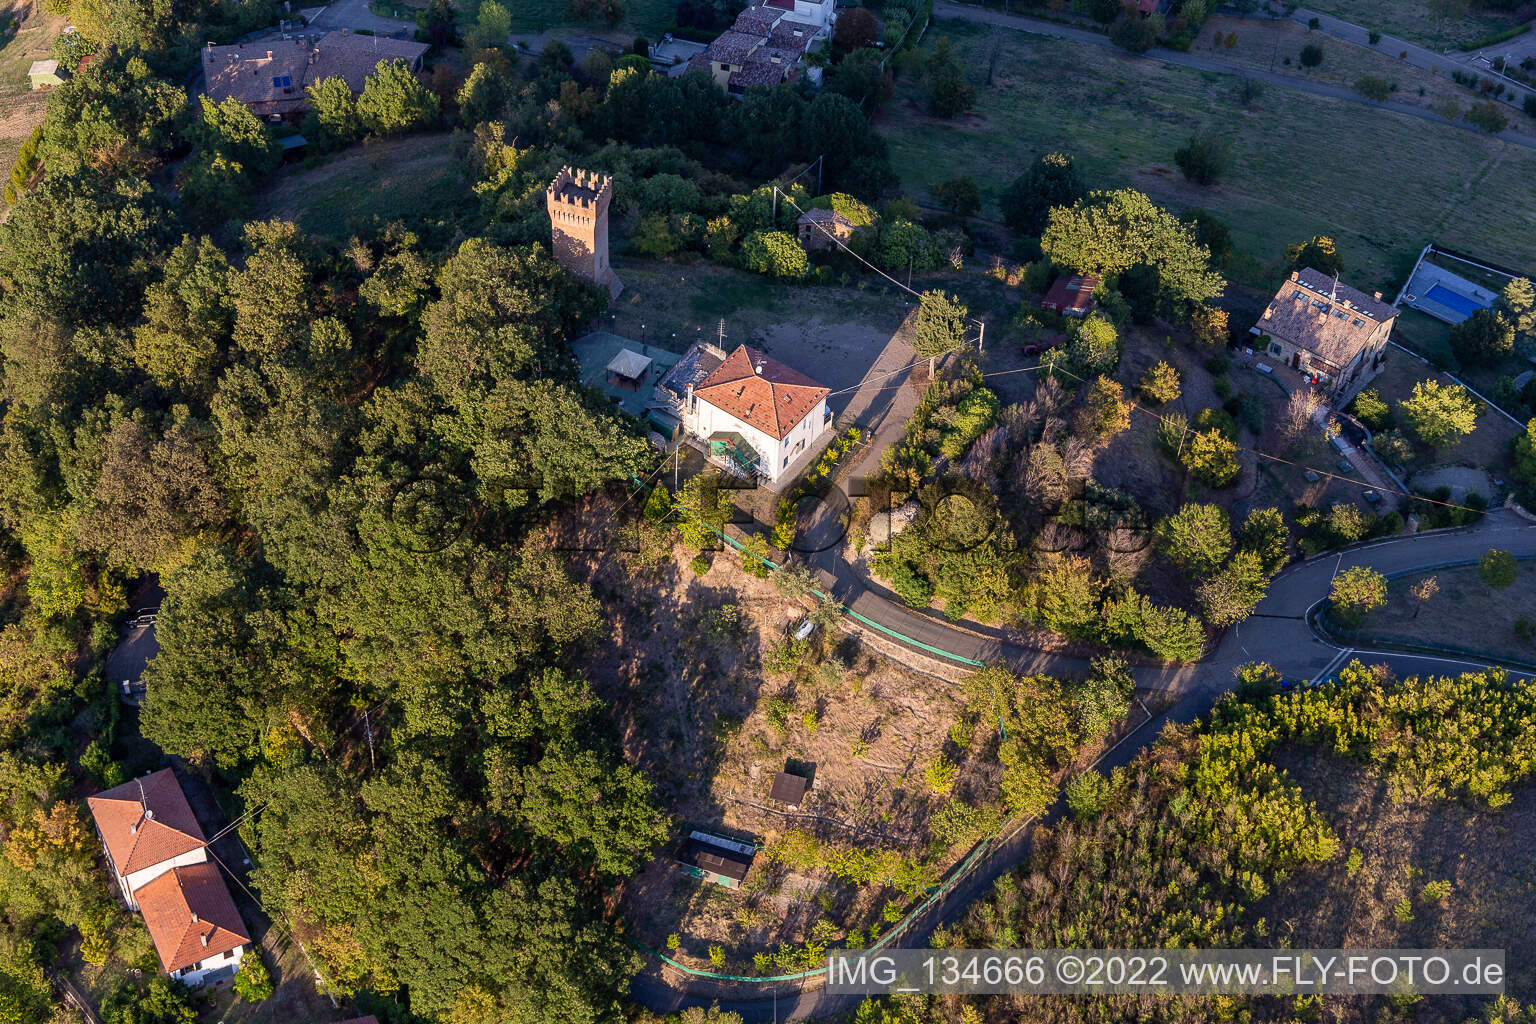 Luftaufnahme von Castello di Dinazzano in Casalgrande im Bundesland Reggio Emilia, Italien